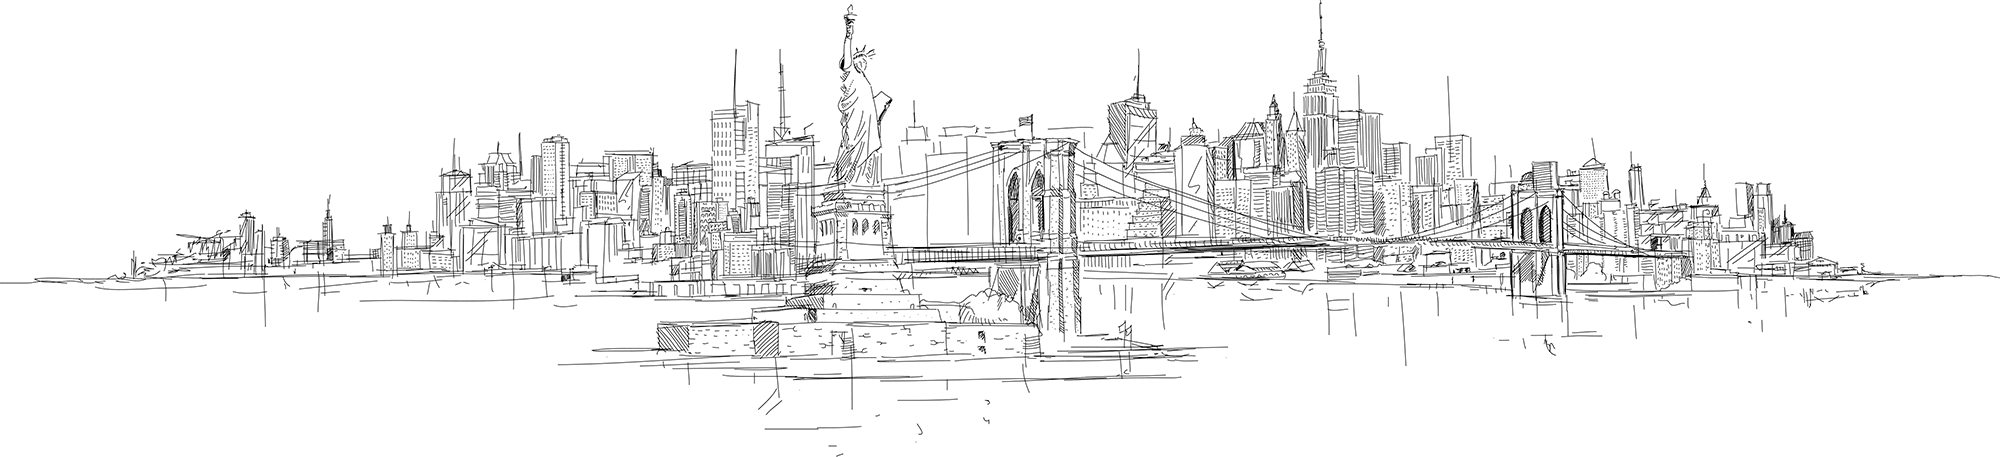 sketch of the New York City skyline.